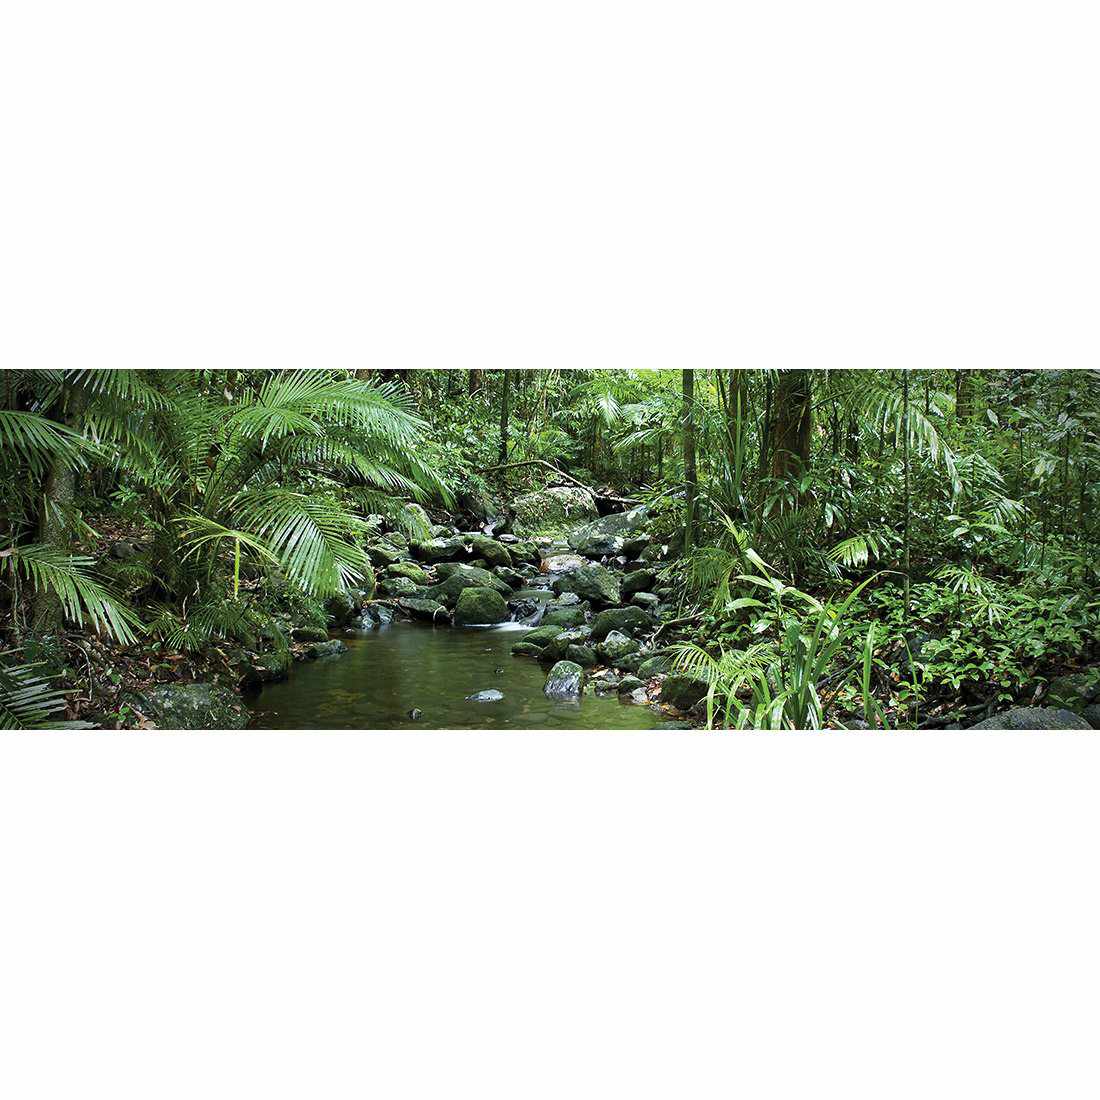 Mossman River In Daintree Rainforest Canvas Art-Canvas-Wall Art Designs-60x20cm-Canvas - No Frame-Wall Art Designs